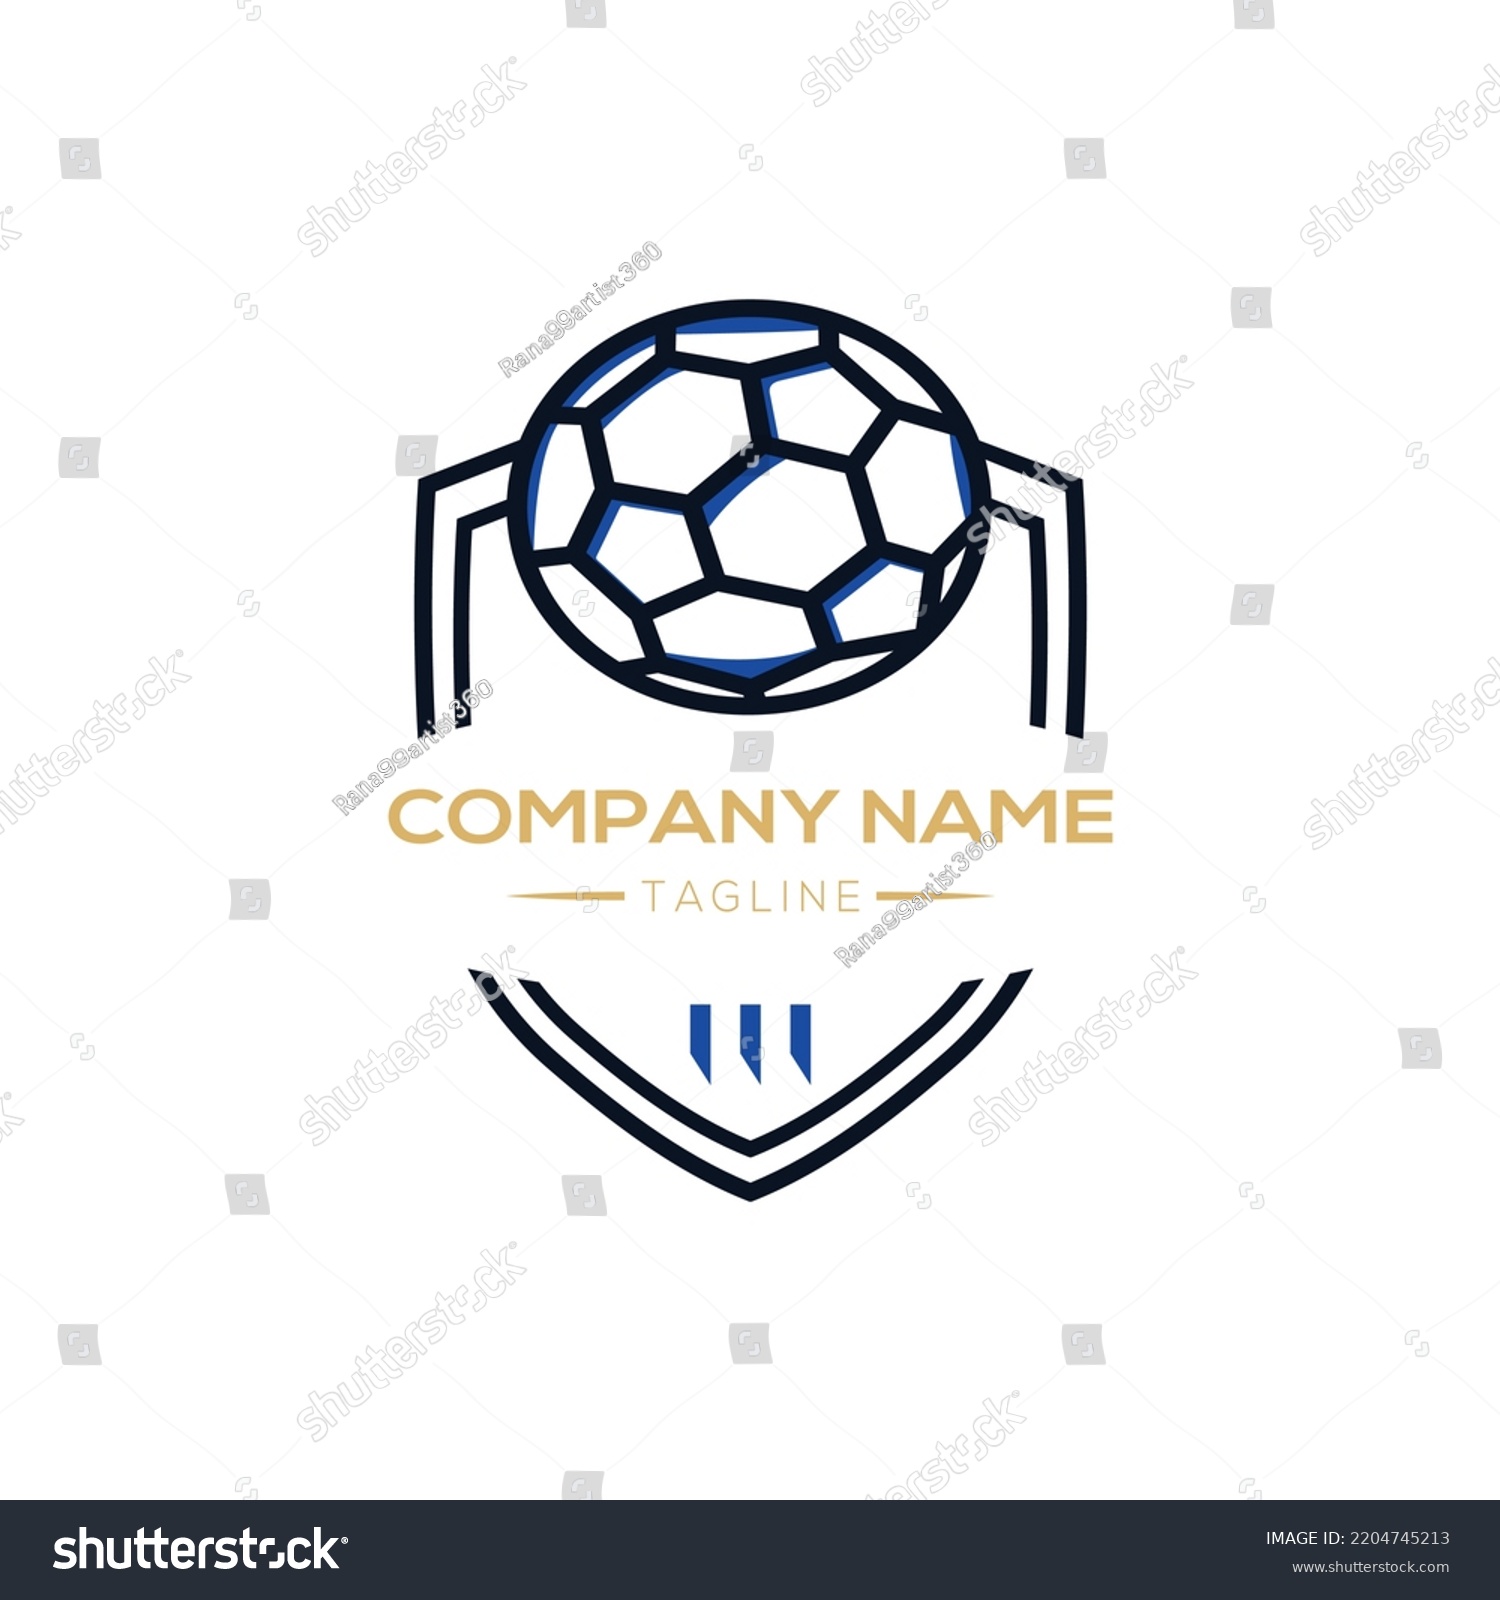 SVG of The Football team logo design looks like a law enforcement badge.  svg